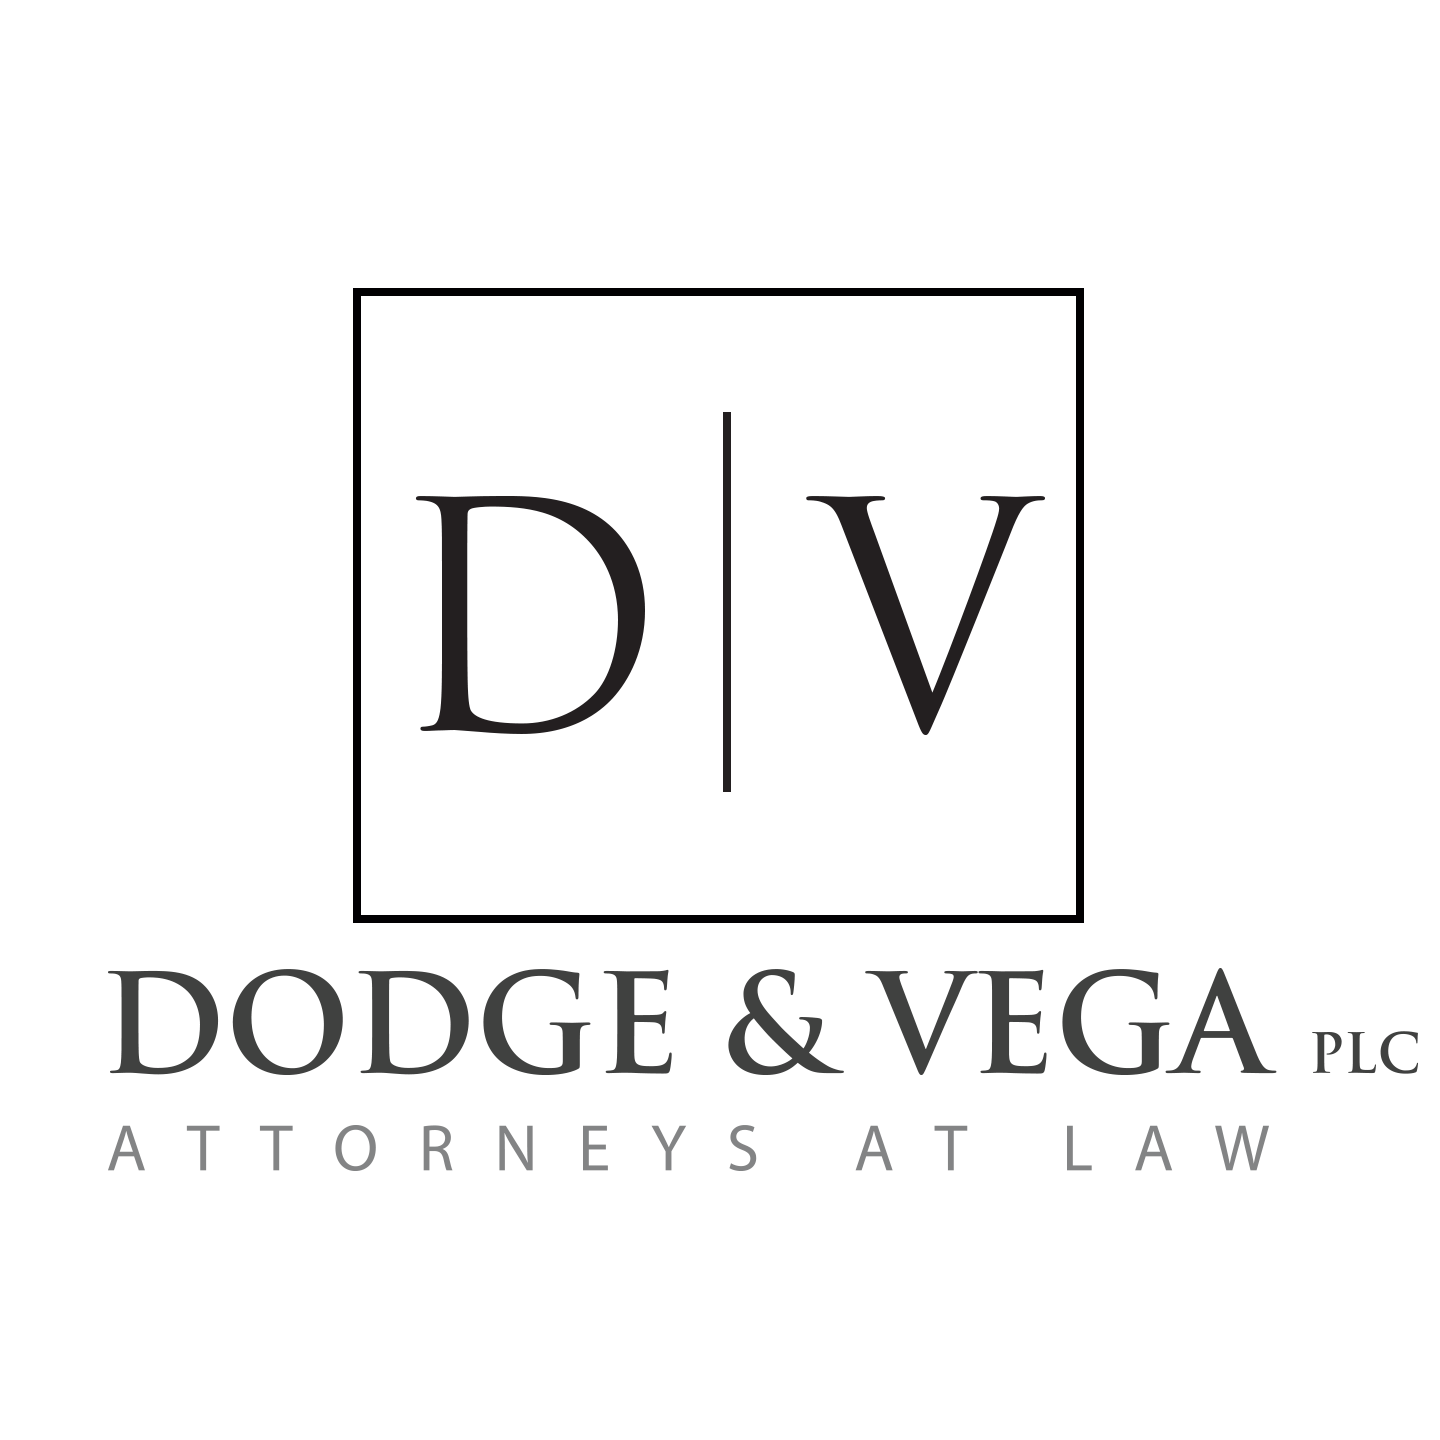 Dodge & Vega: Attorneys at Law